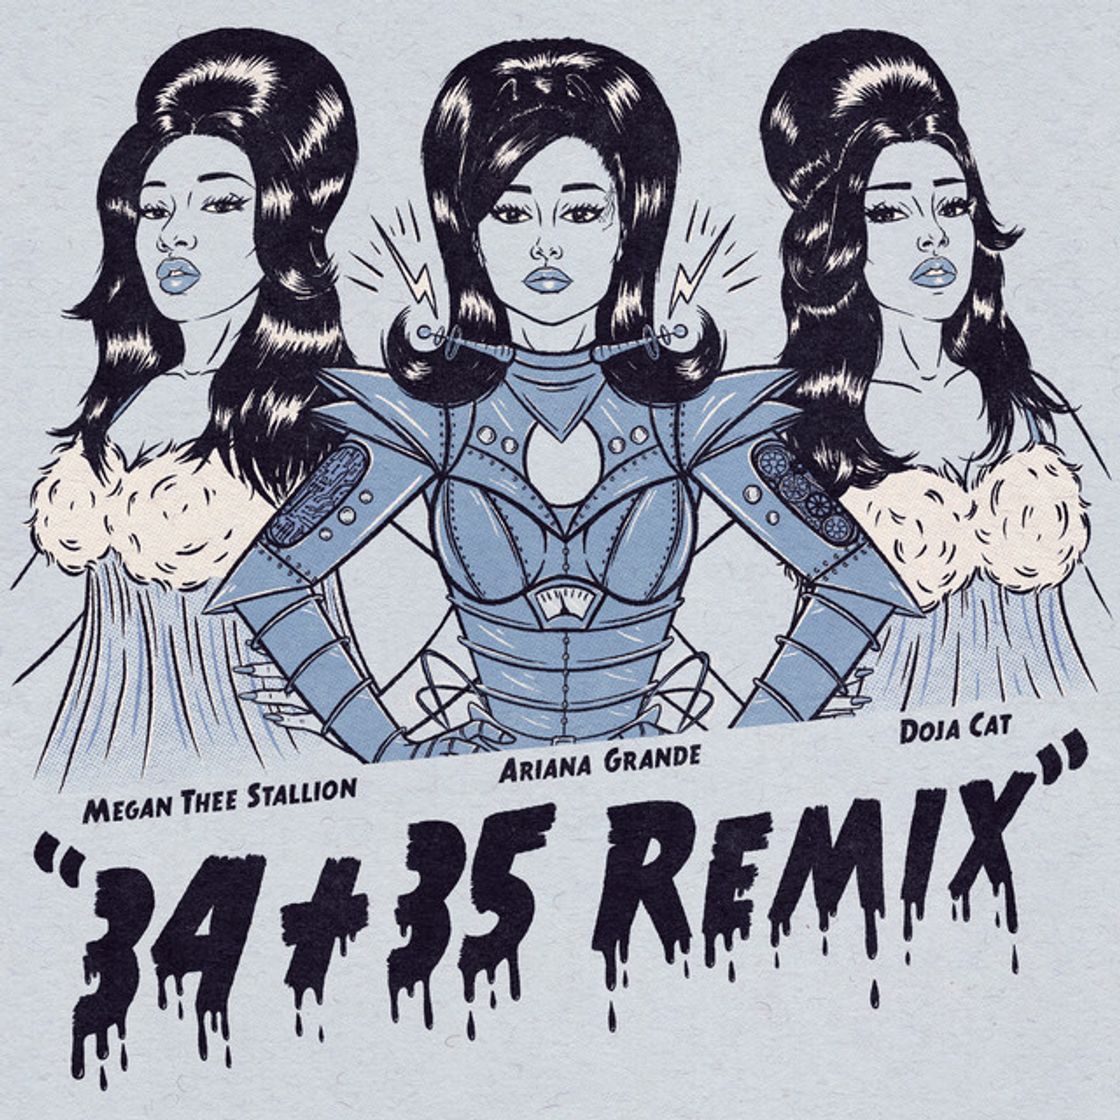 34+35 REMIX (feat. Doja Cat and Megan Thee Stallion)